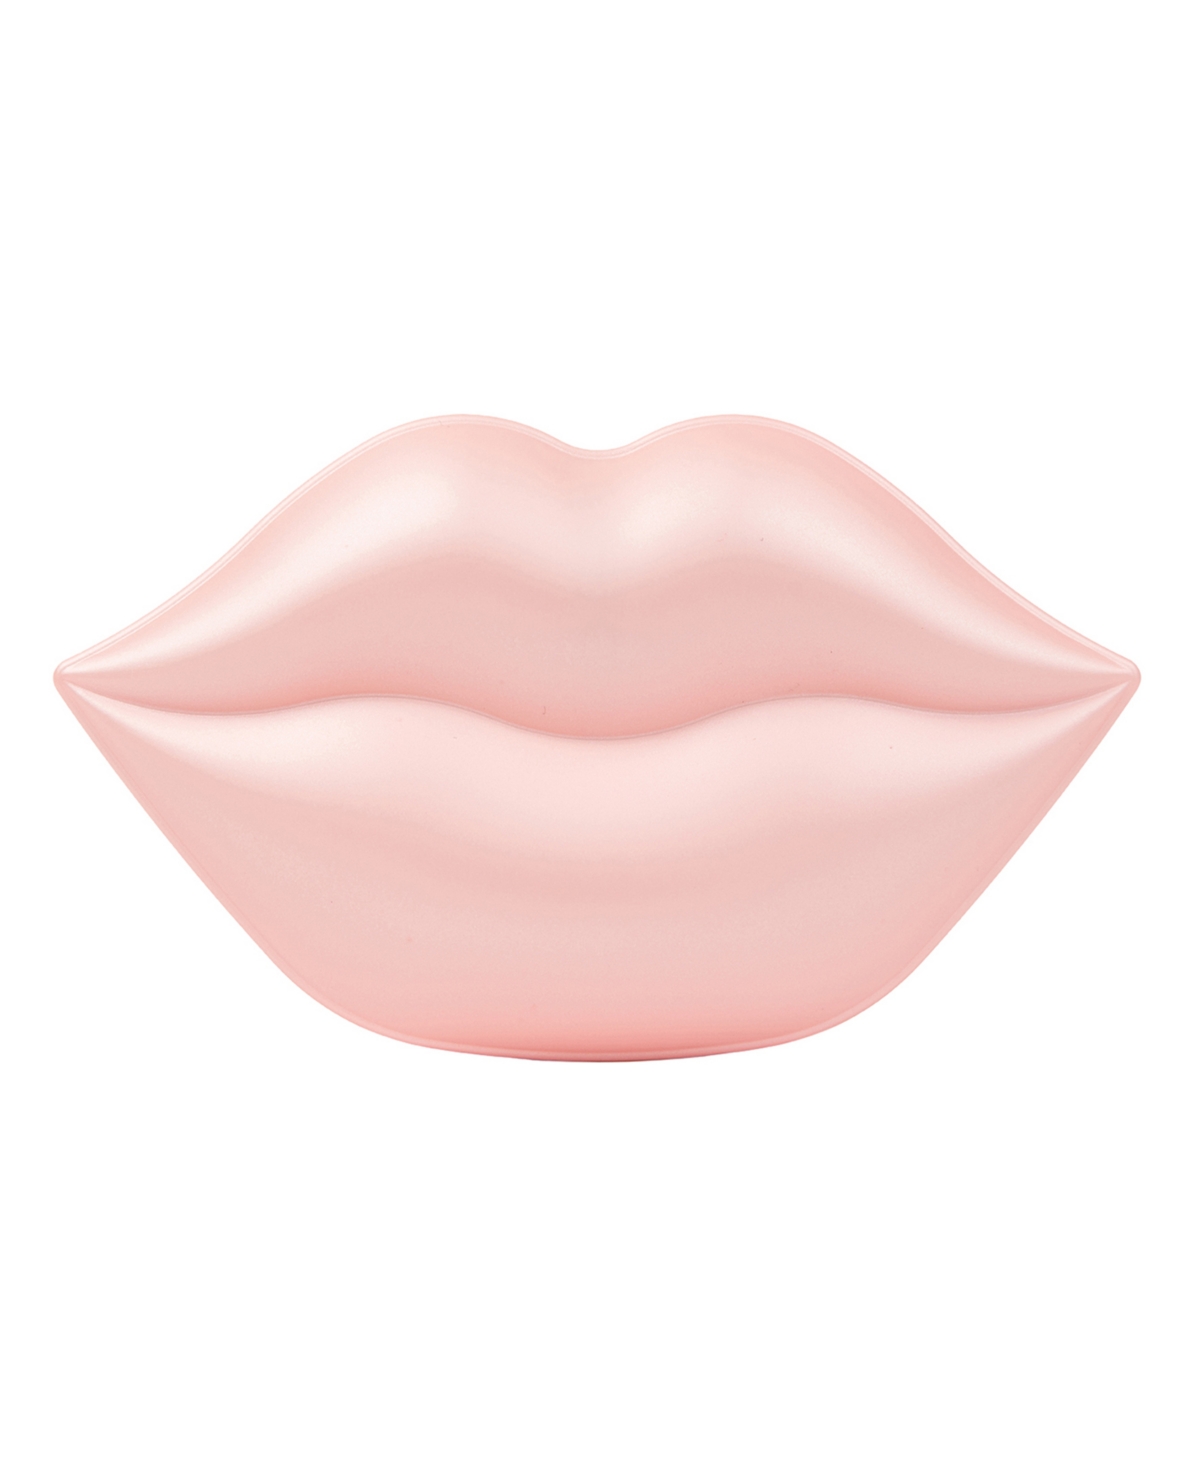 Kocostar Cherry Blossom Lip Mask, Unscented